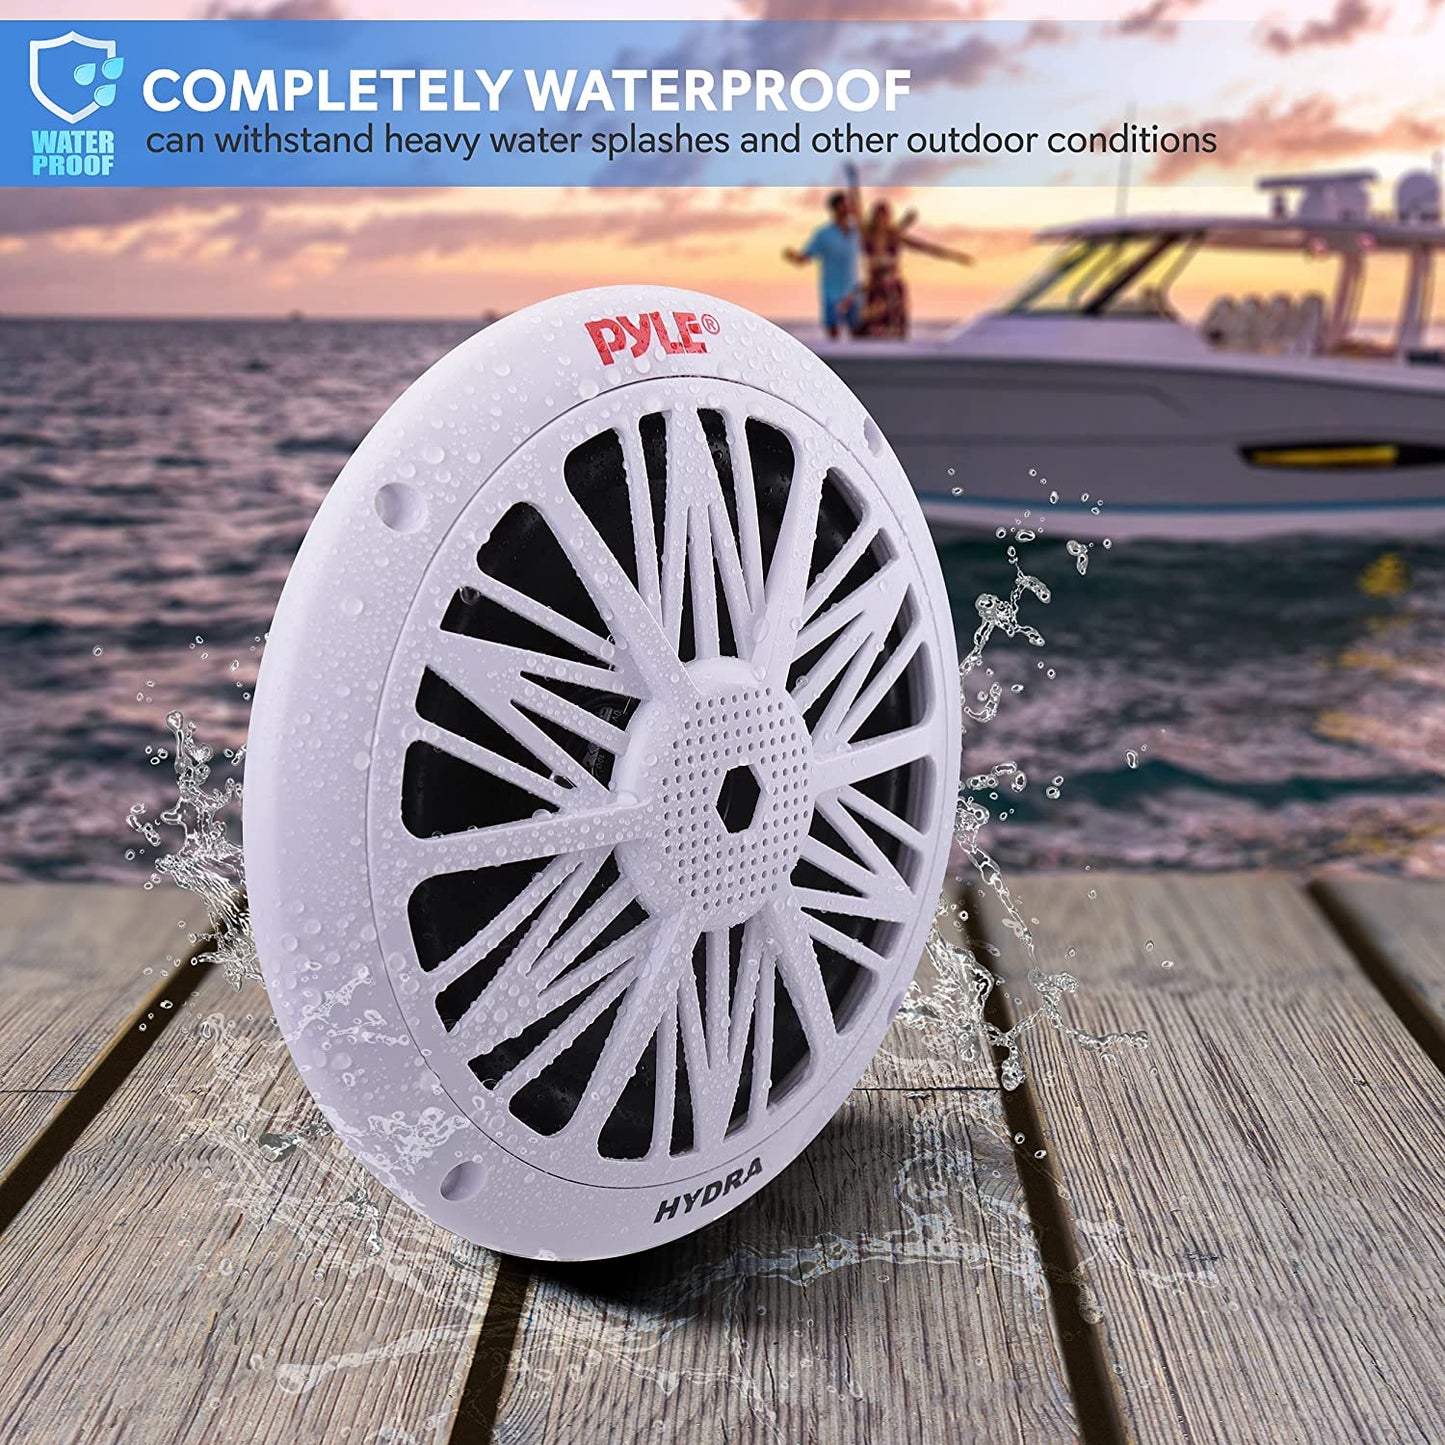 Pyle PLMR62 200w 6.5" 2 Way White Marine Boat Outdoor WaterProof PAtio Speakers